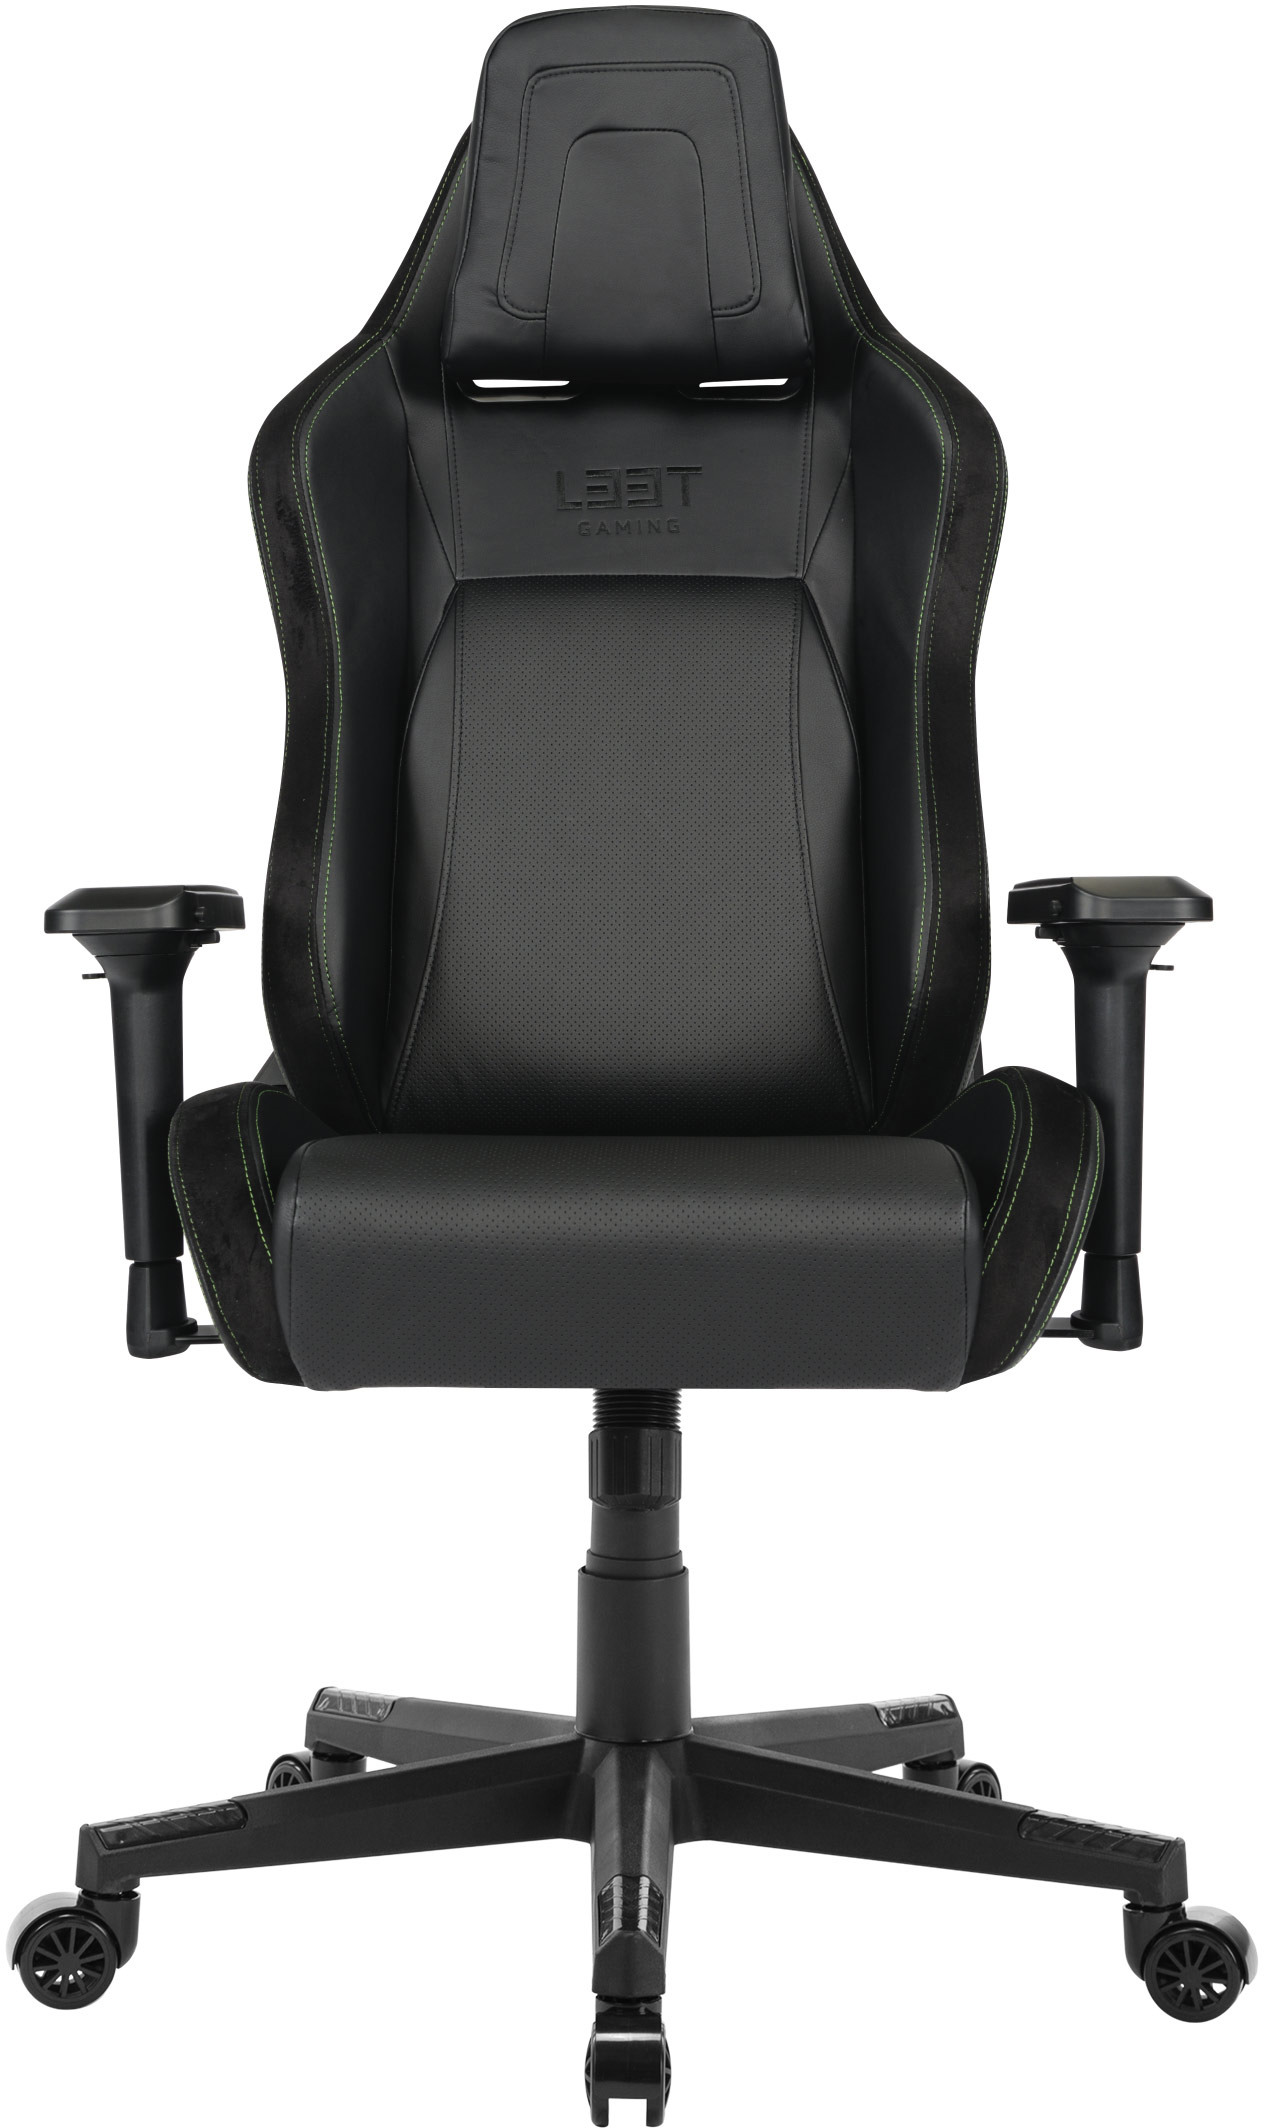 L33T E-Sport Pro Limited PU 1830040 Gaming Chair, Black